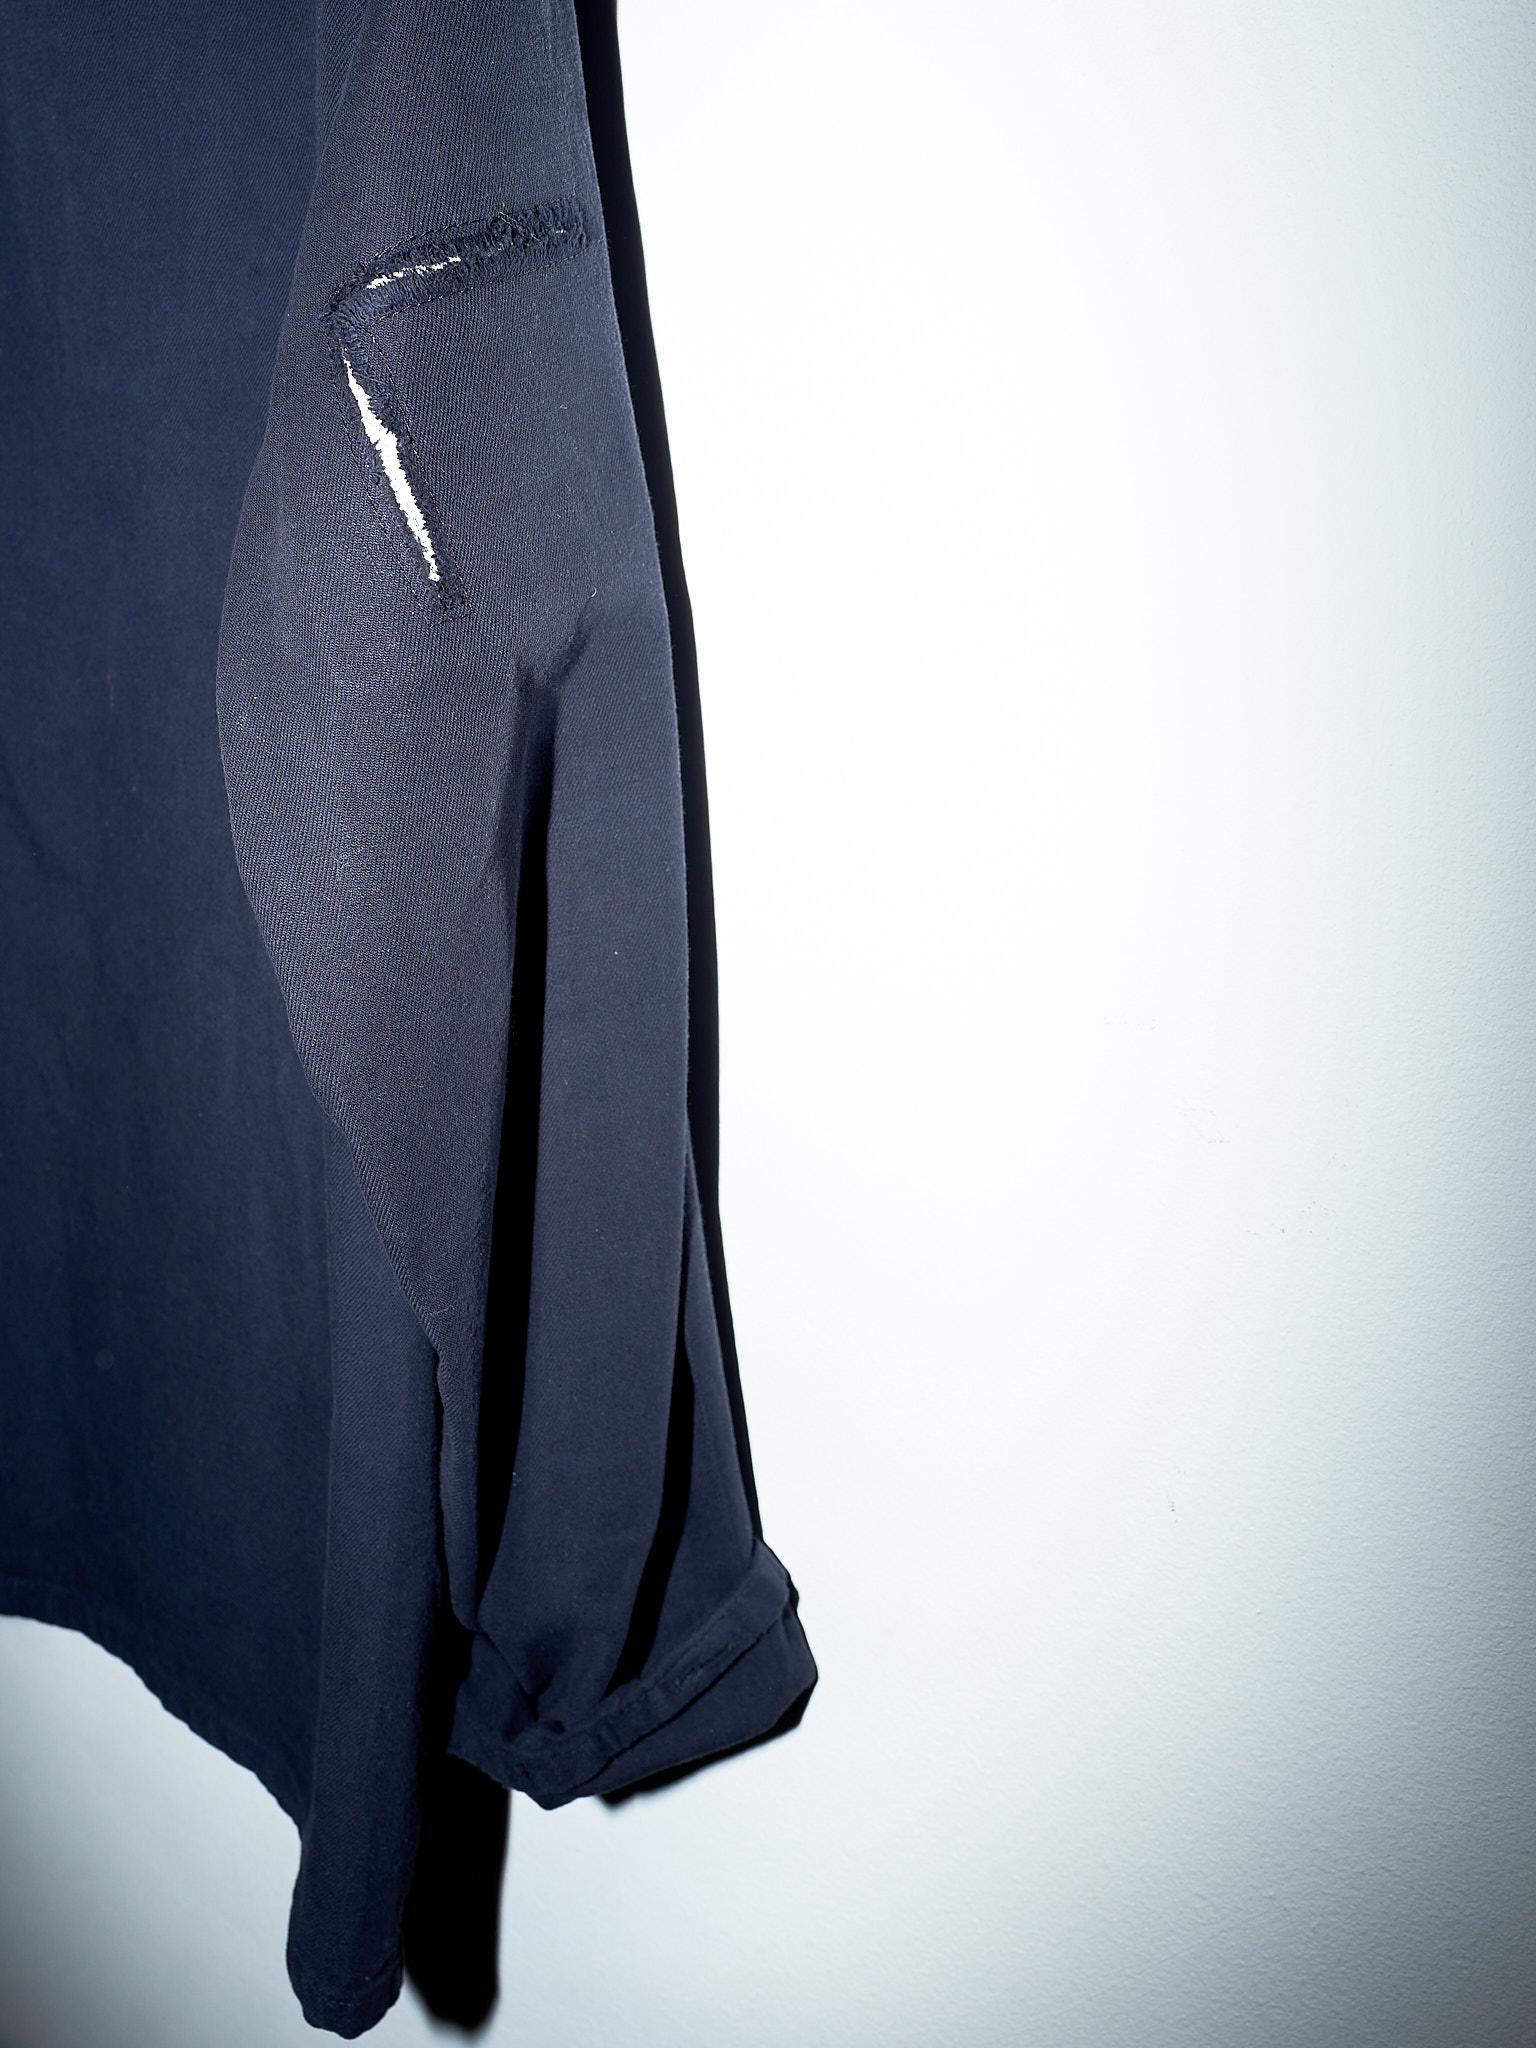 Black Jacket Lurex Tweed Pockets Large Cotton J Dauphin For Sale 1